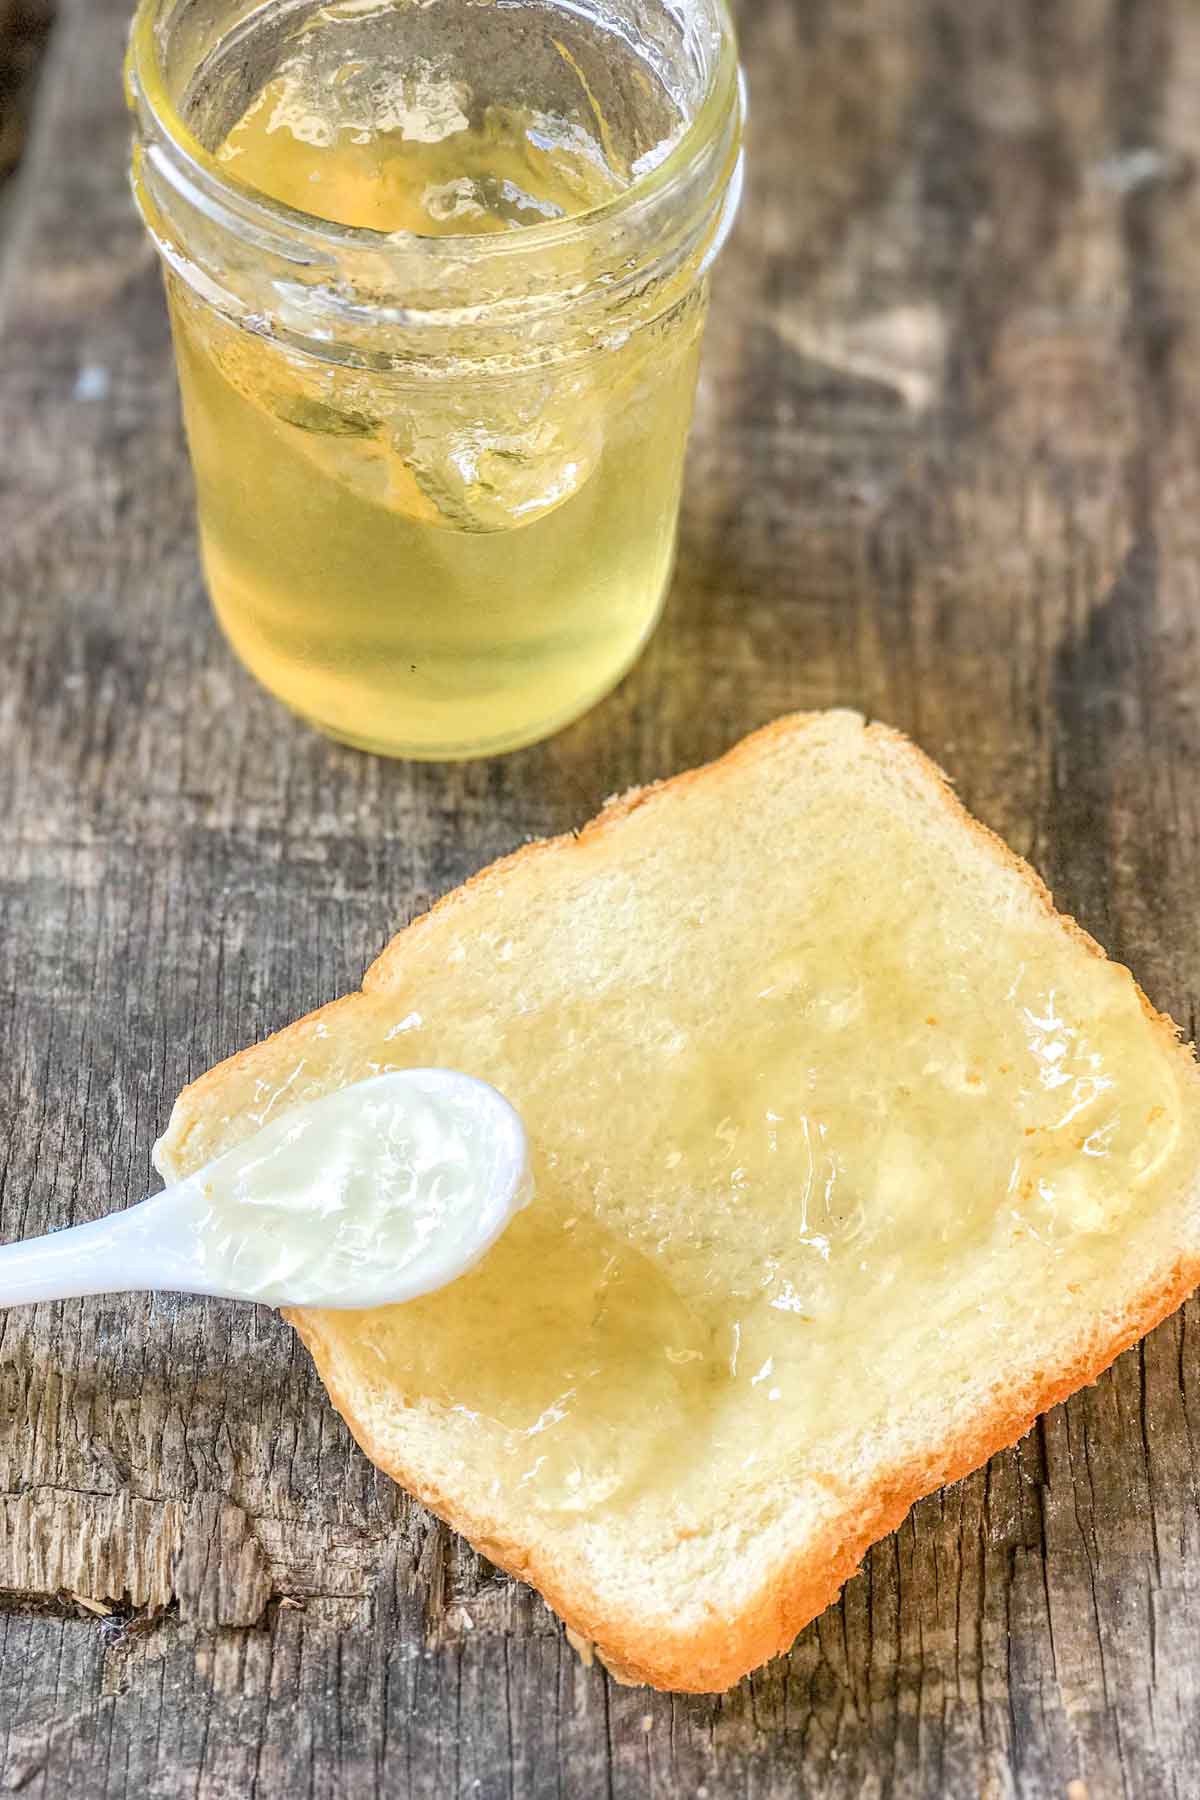 Spooning Honeysuckle Jelly onto a slice of bread.